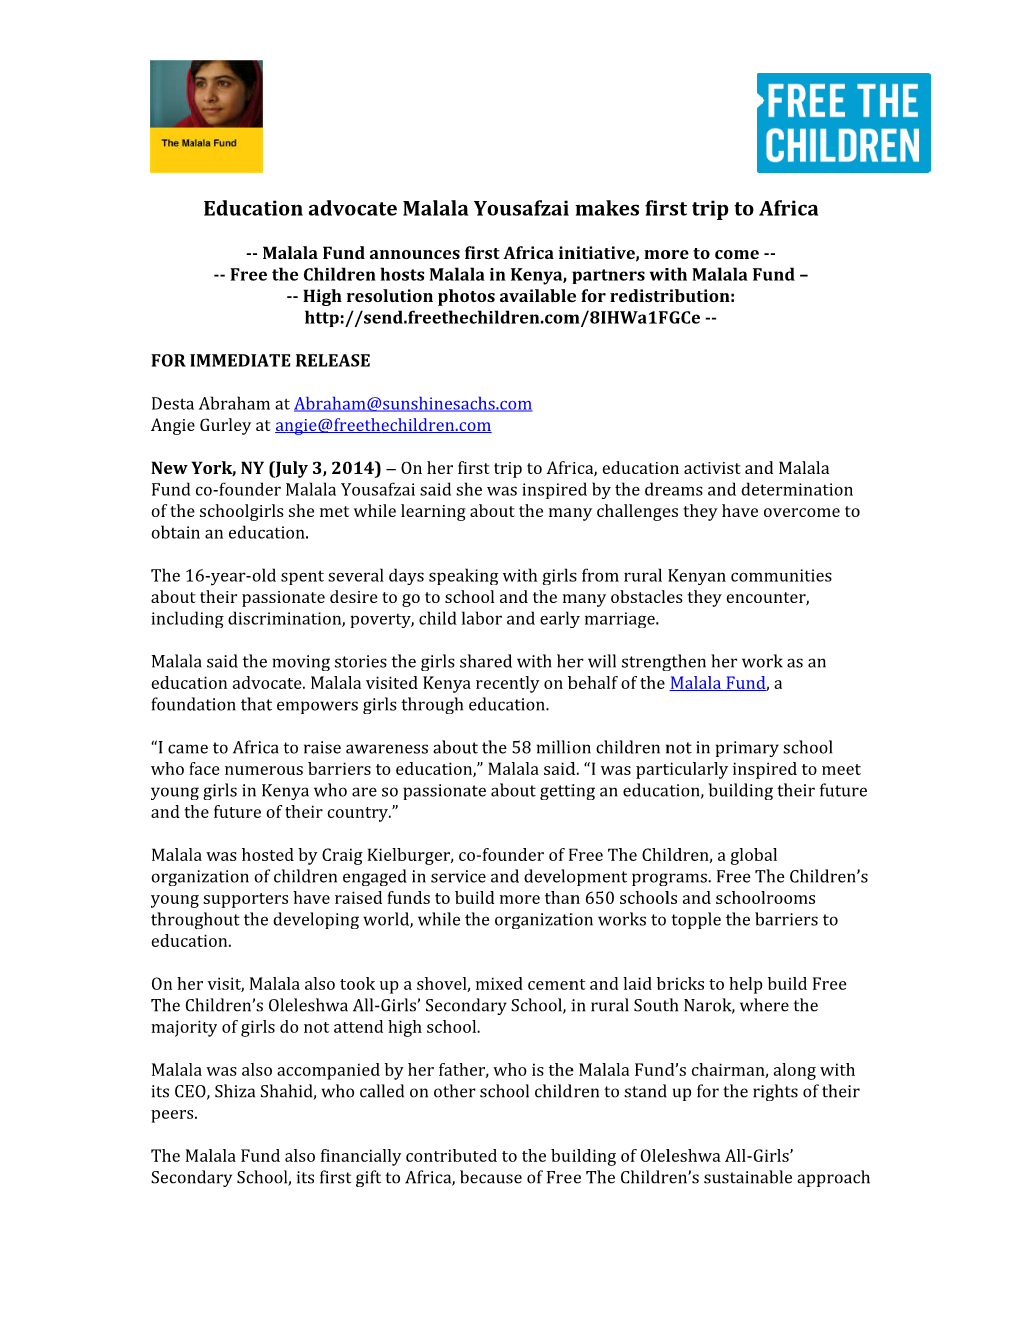 FINAL Malala Trip to Kenya Press Release July 3, 2014